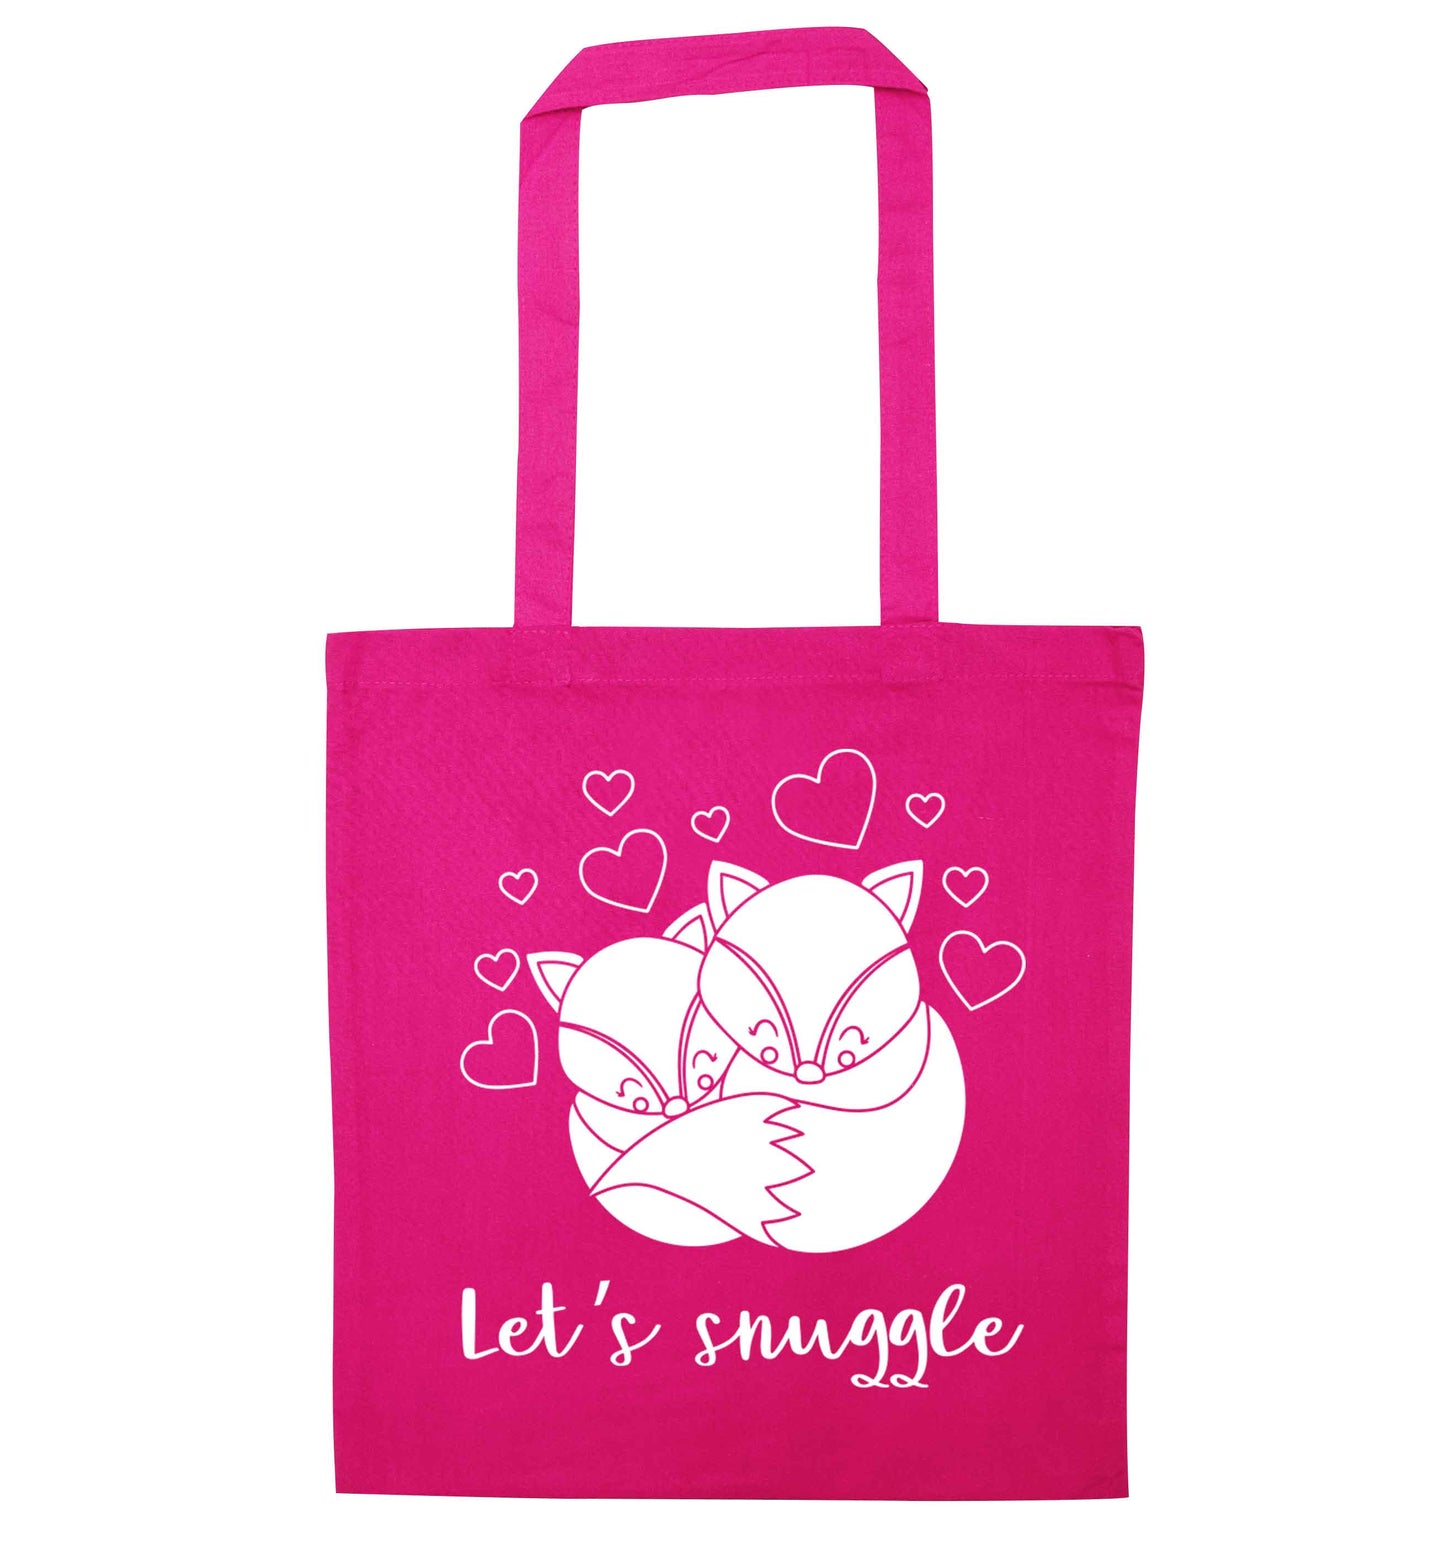 Let's snuggle pink tote bag